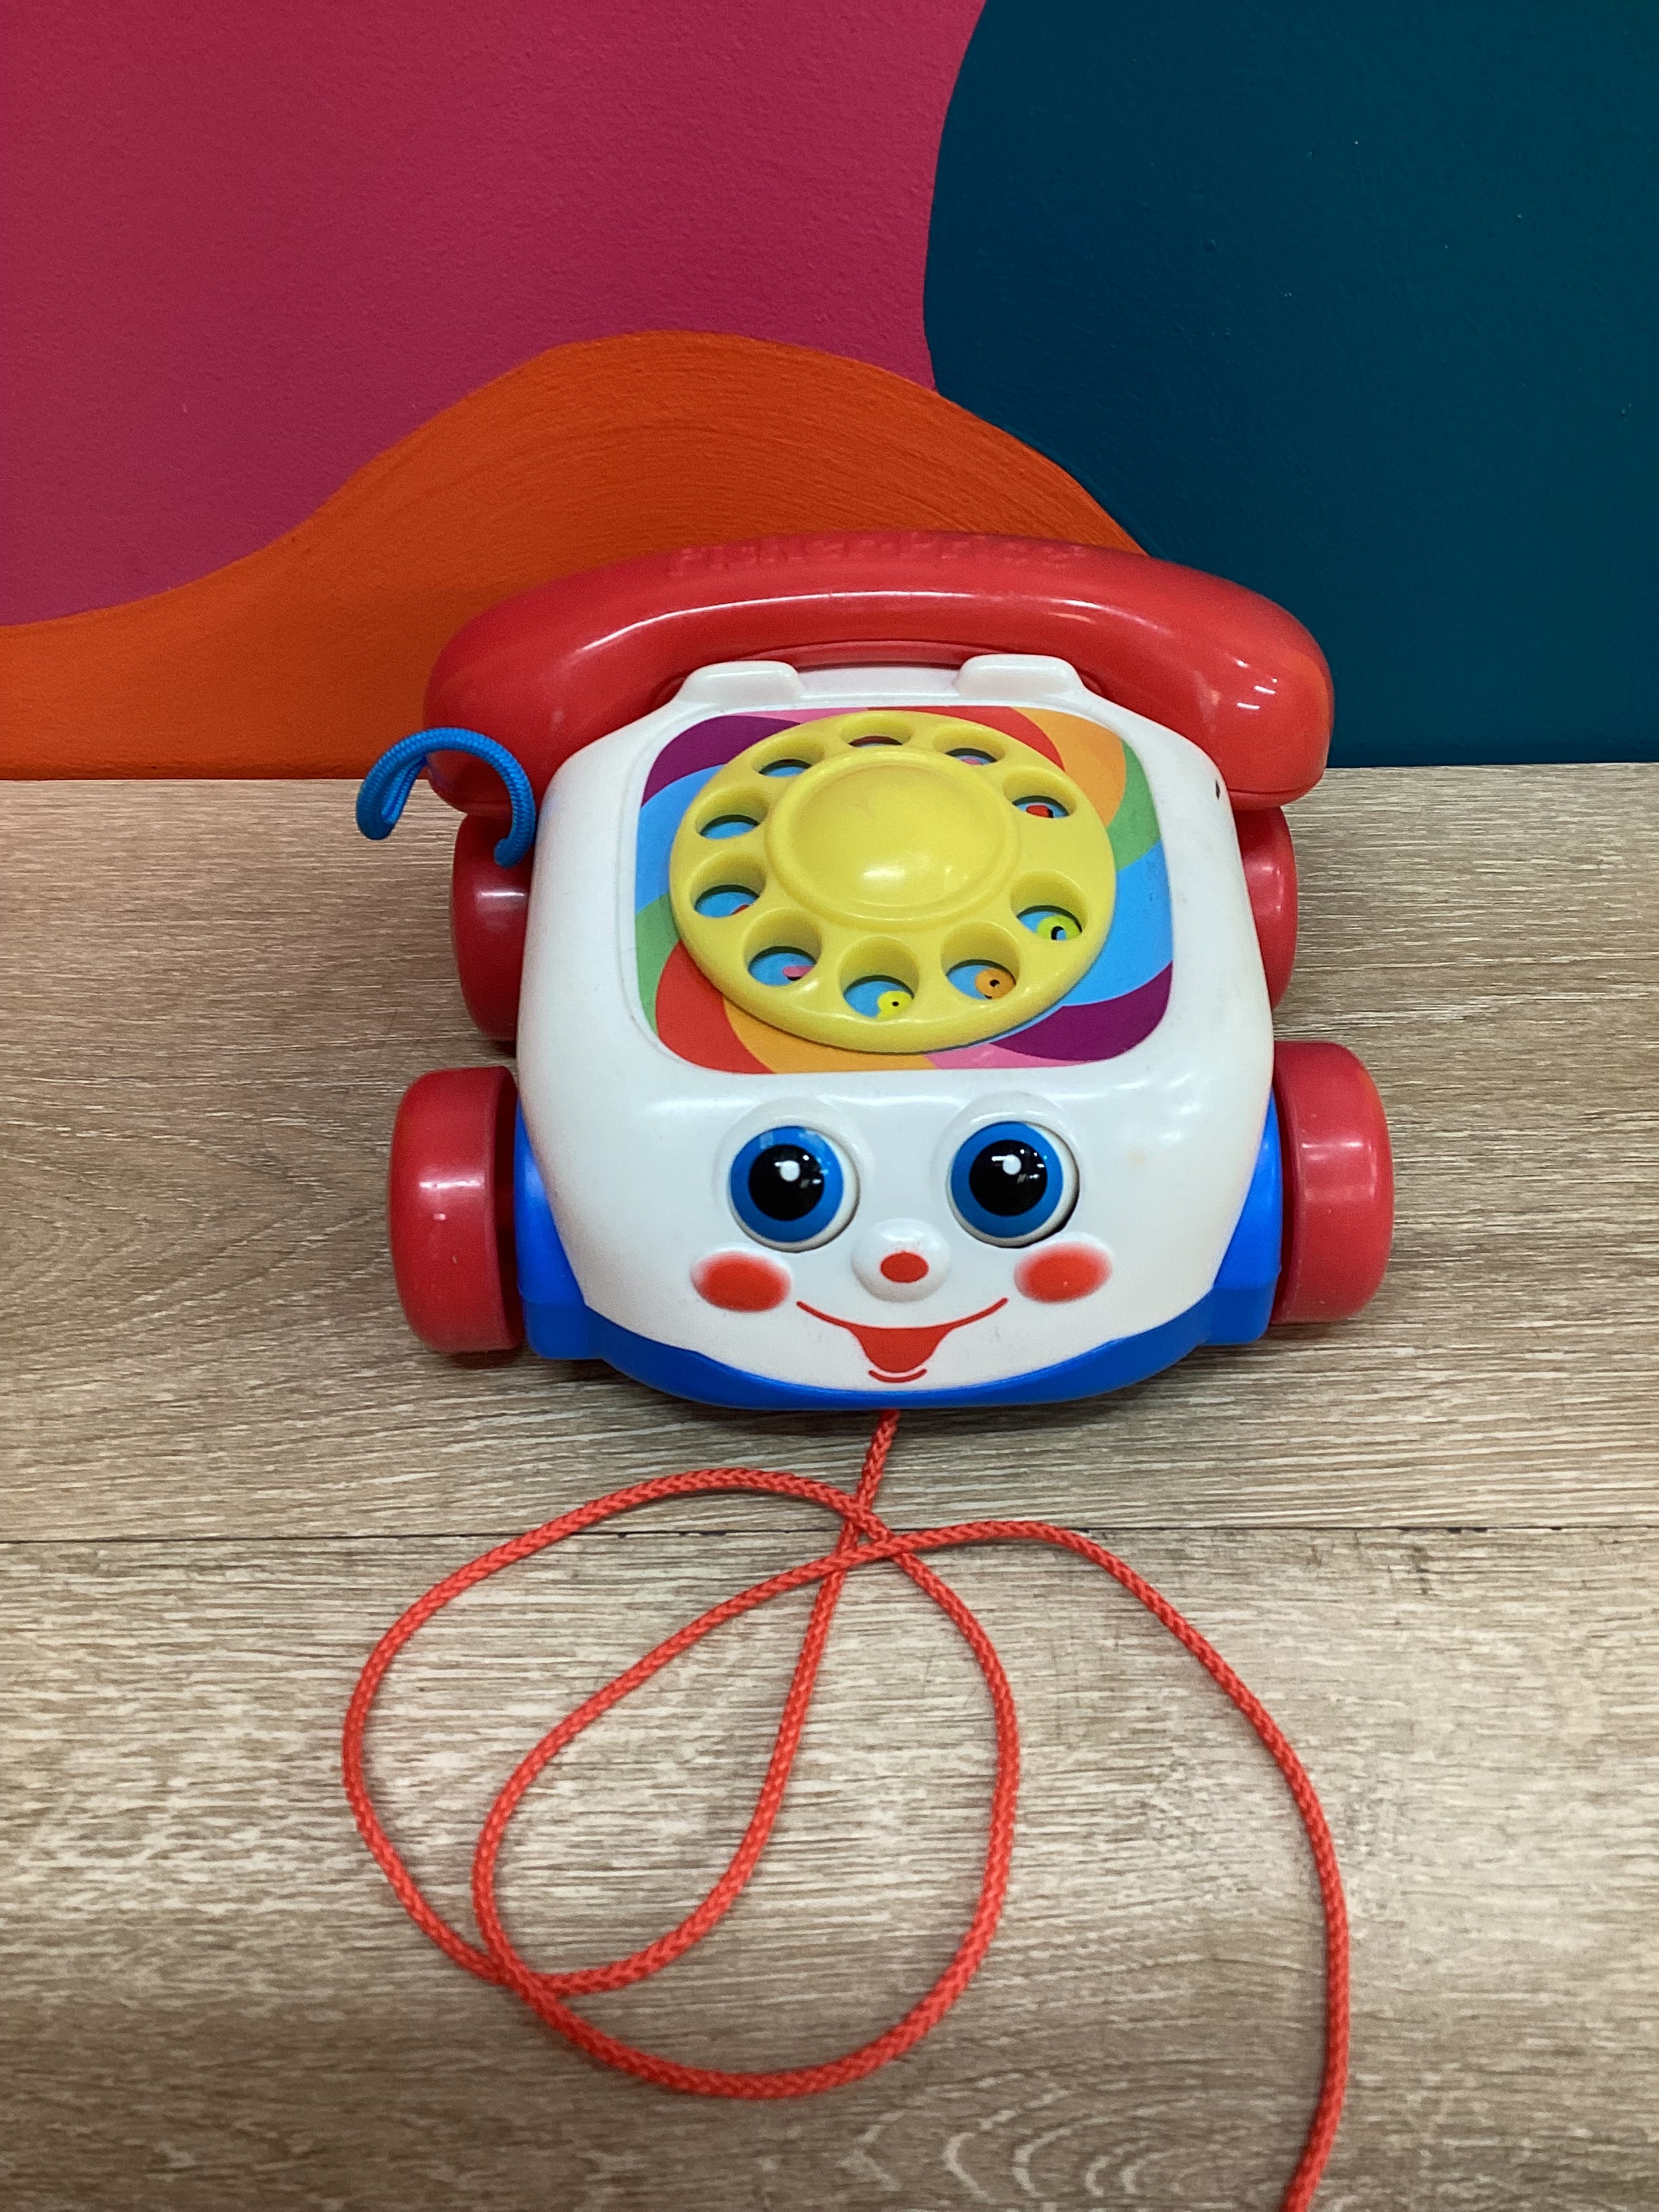 Mattel Toy Phone